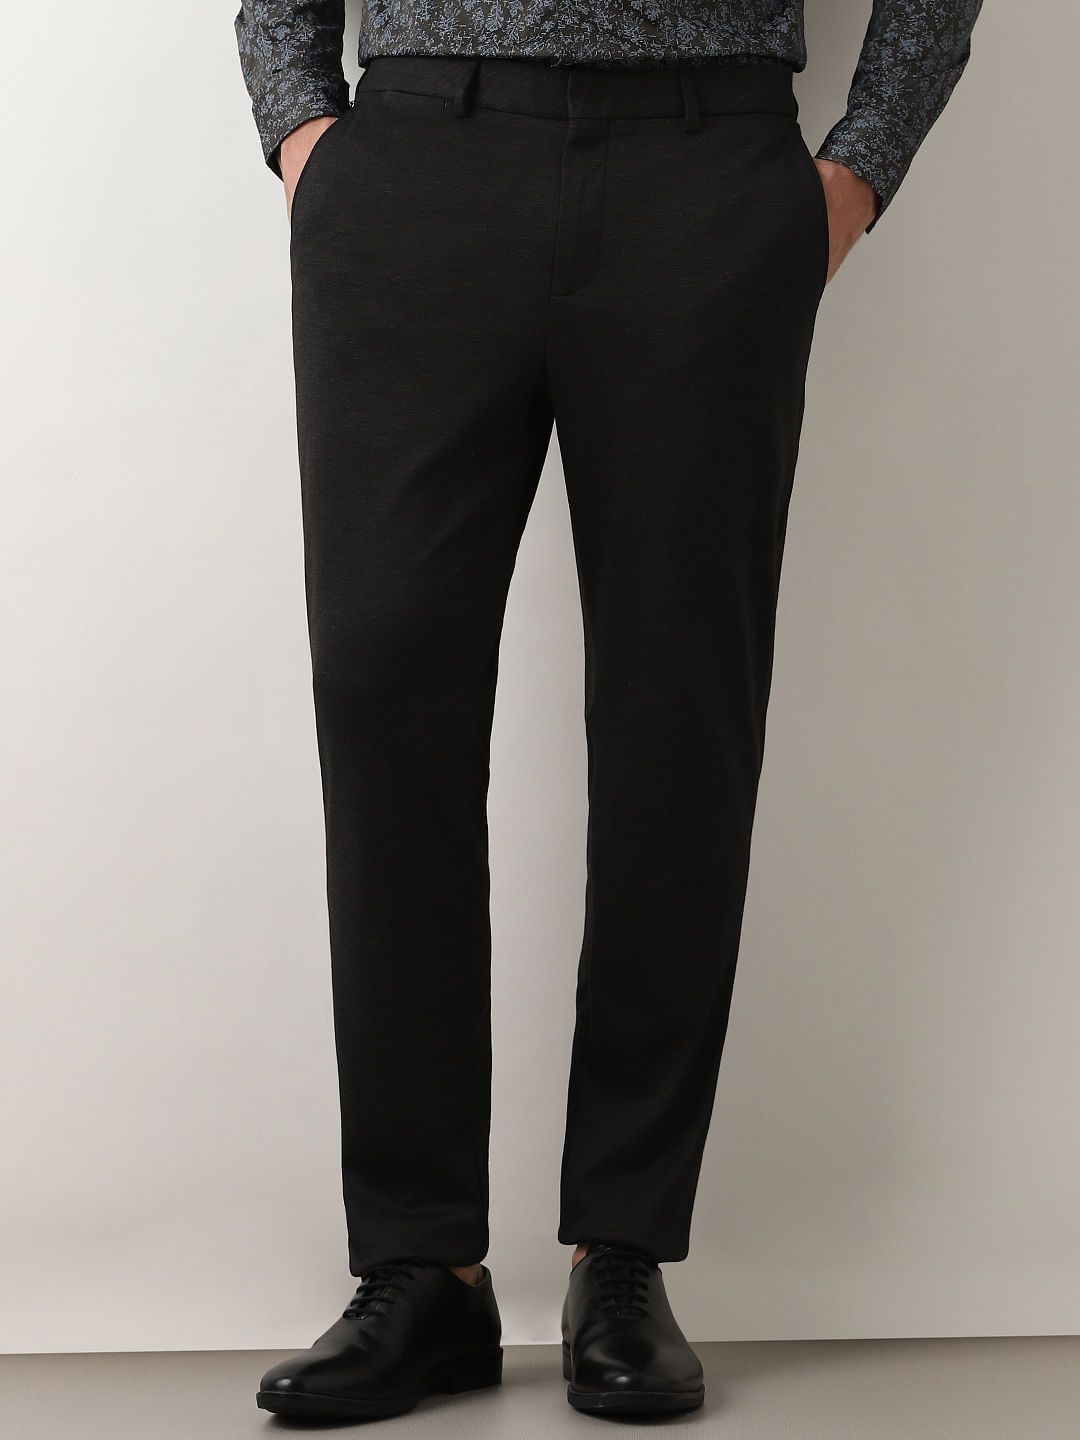 COMBRAIDED Slim Fit Men Black Trousers - Buy COMBRAIDED Slim Fit Men Black  Trousers Online at Best Prices in India | Flipkart.com